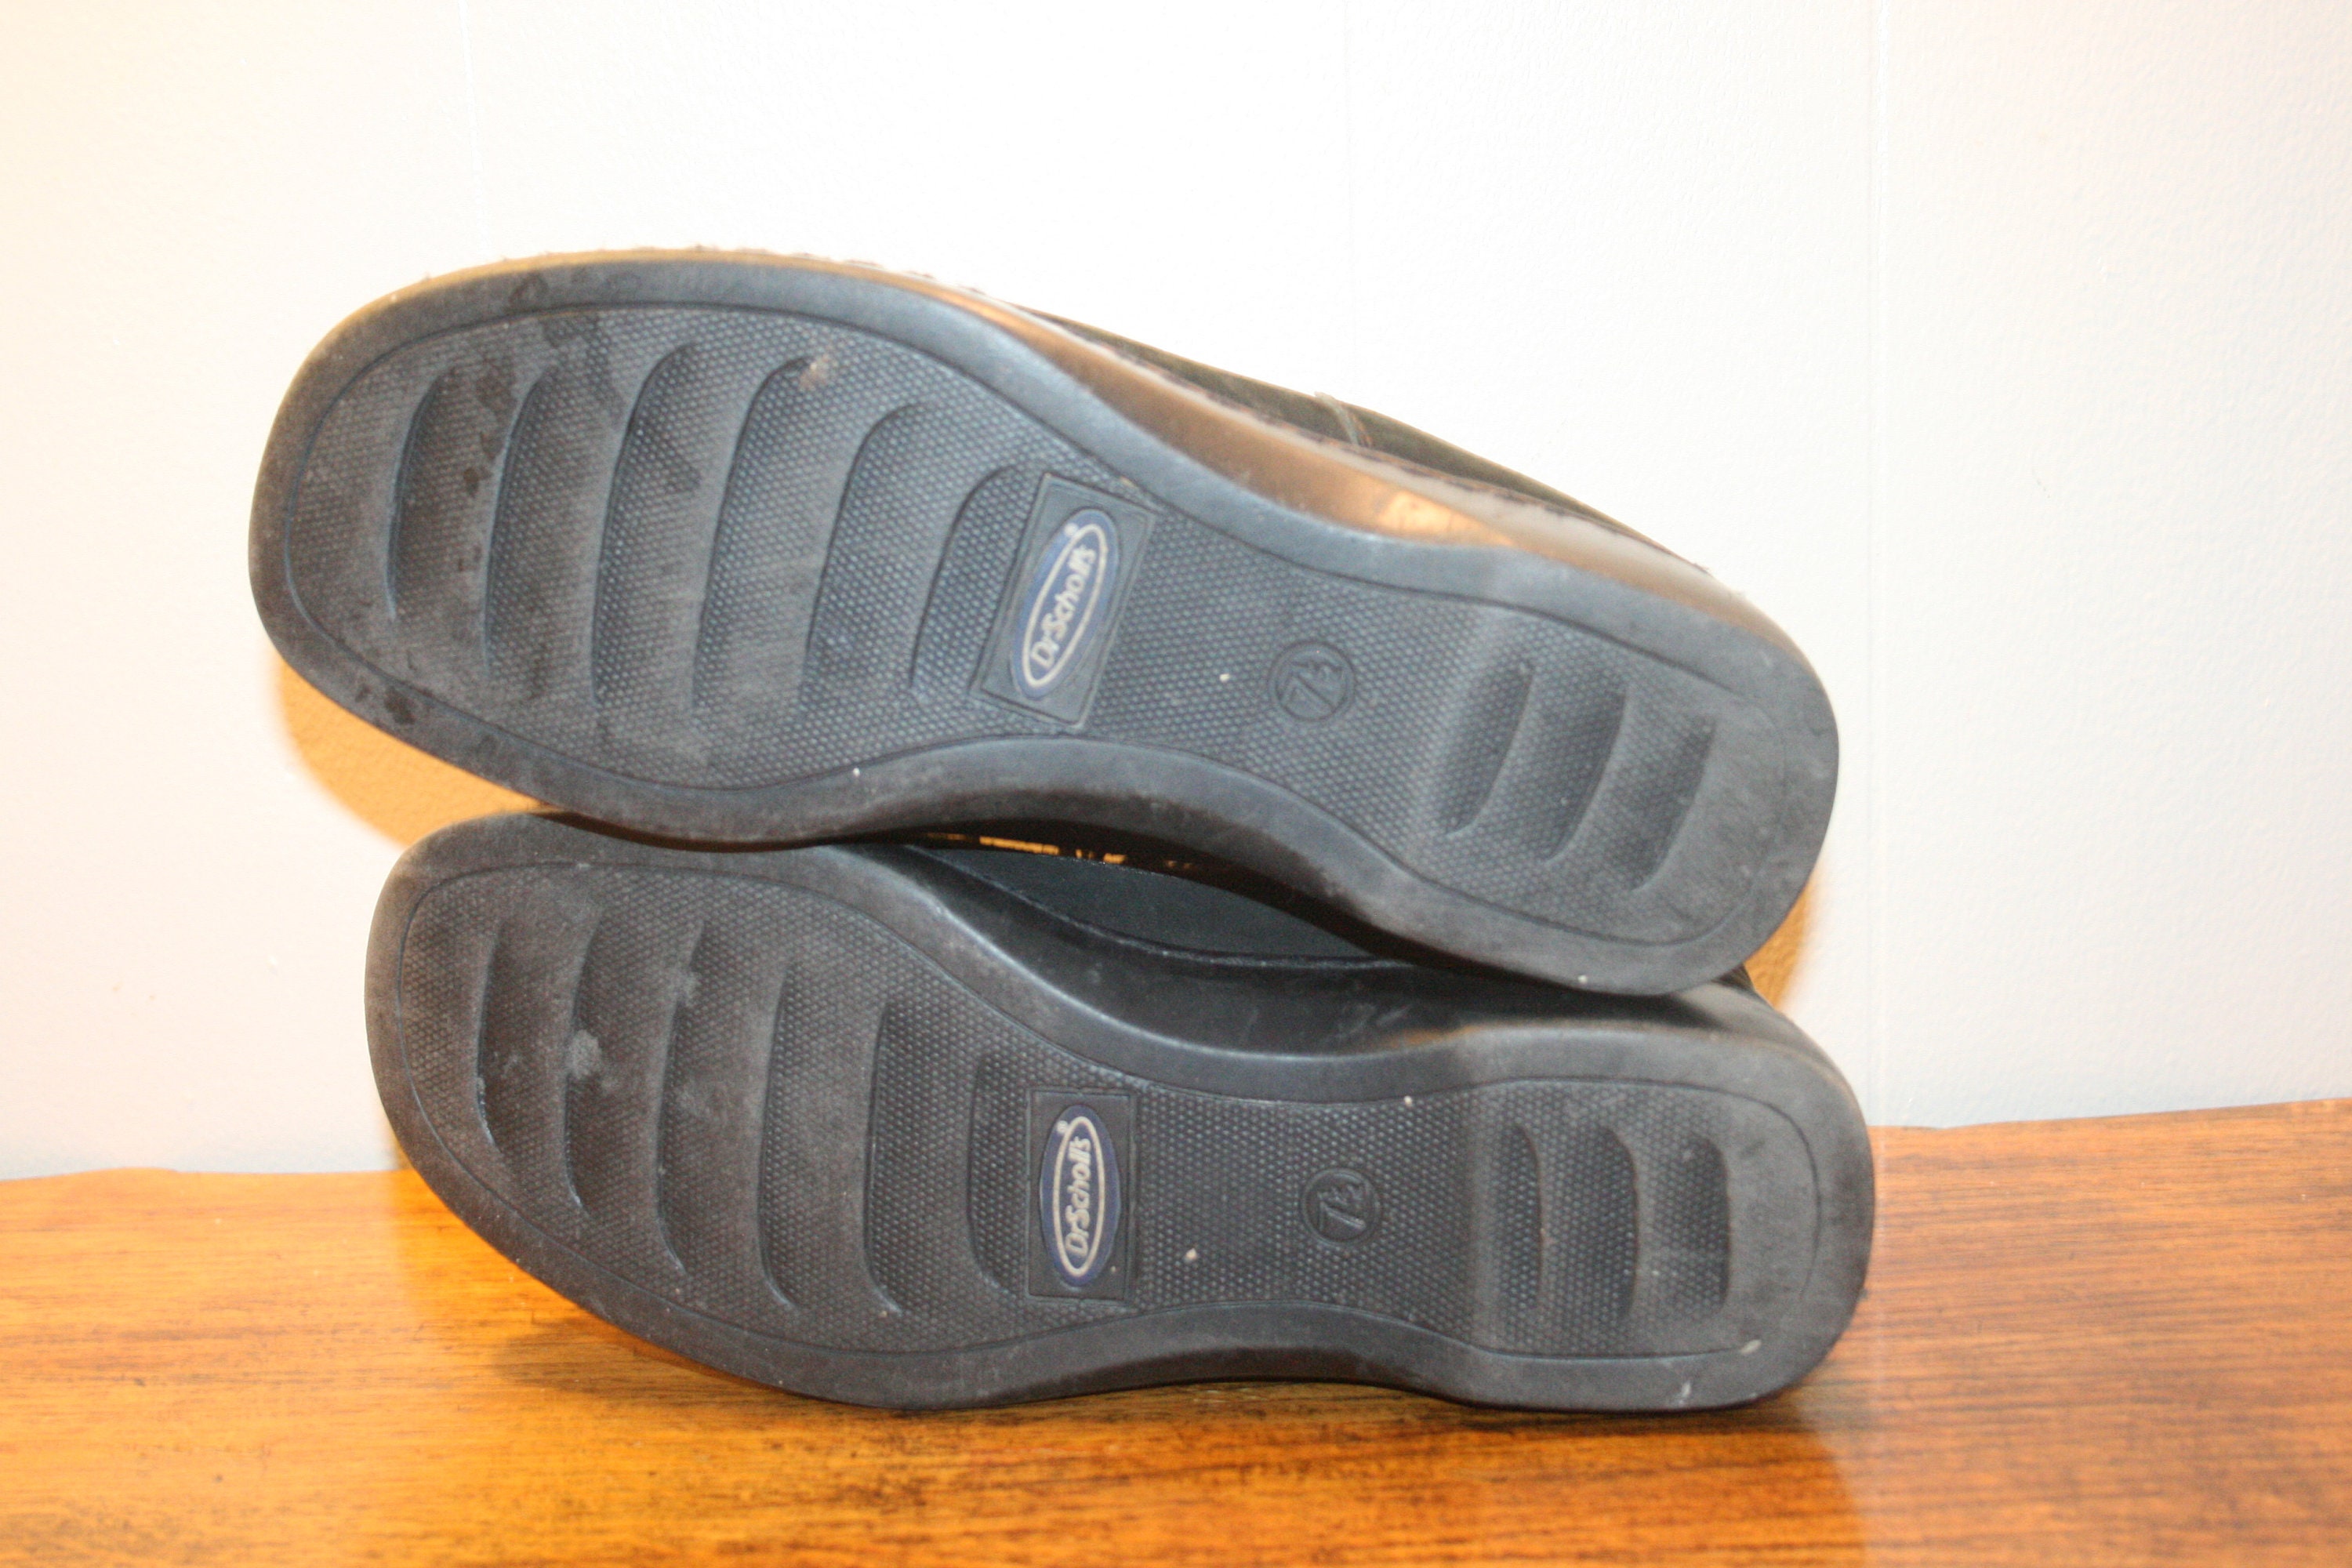 7.5DR.SCHOLLS LEATHER Bootsblack leather bootsblack leather | Etsy